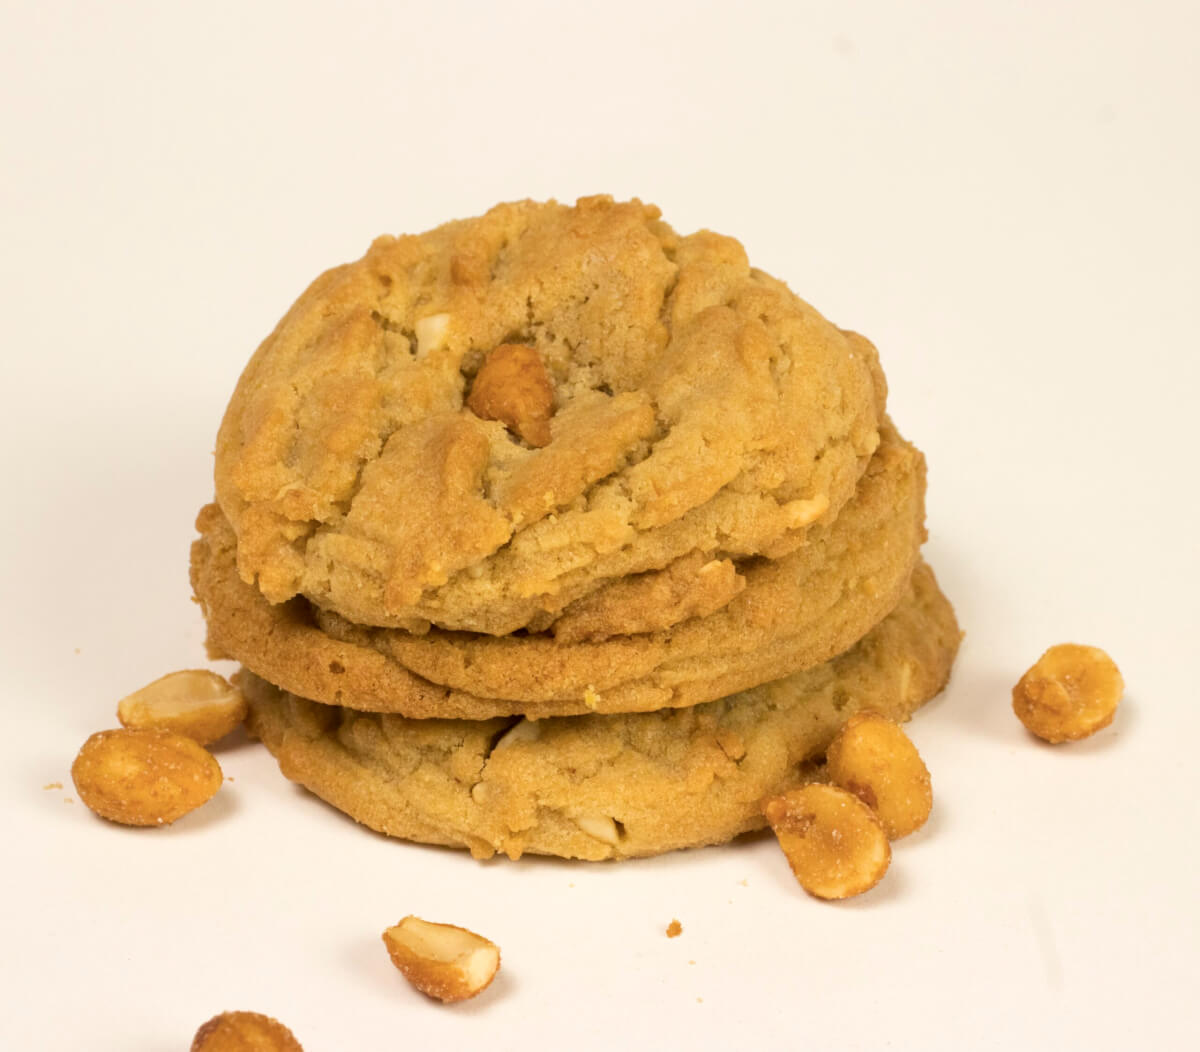 Peanut-packed Hendry’s Beach cookies